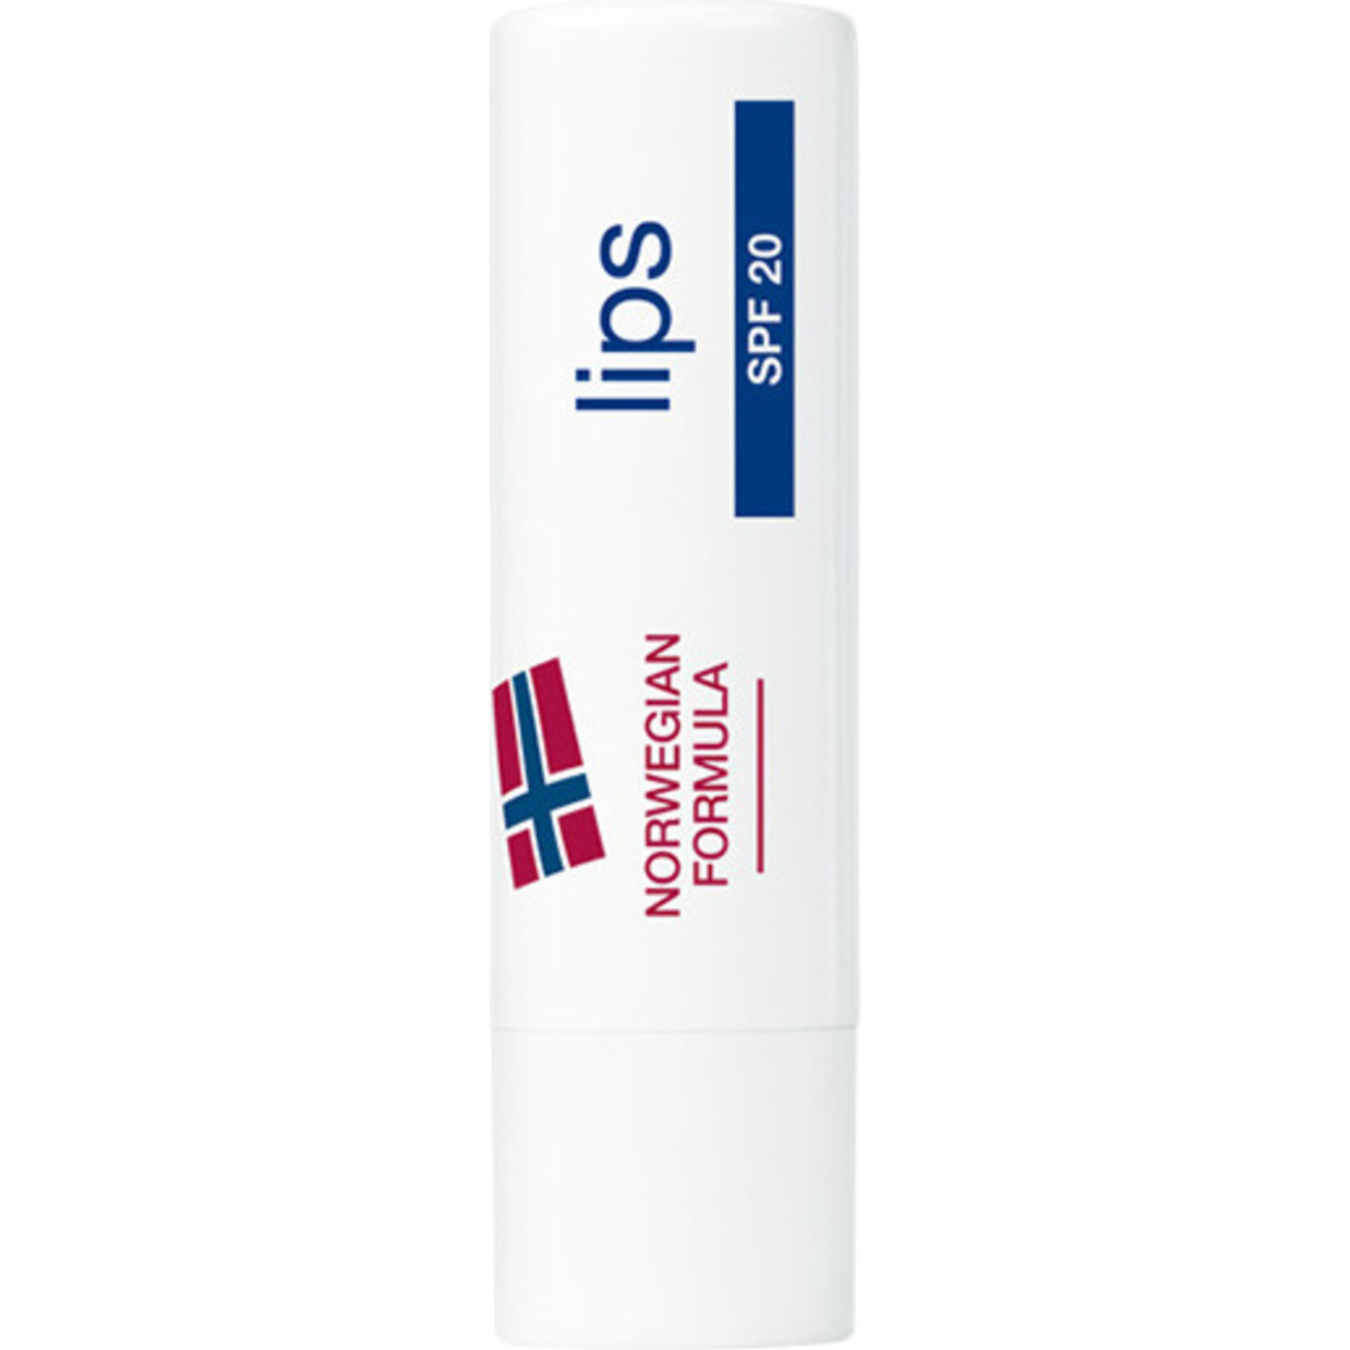 Neutrogena Norwegian Formula Lipstick with SPF 20 Protection